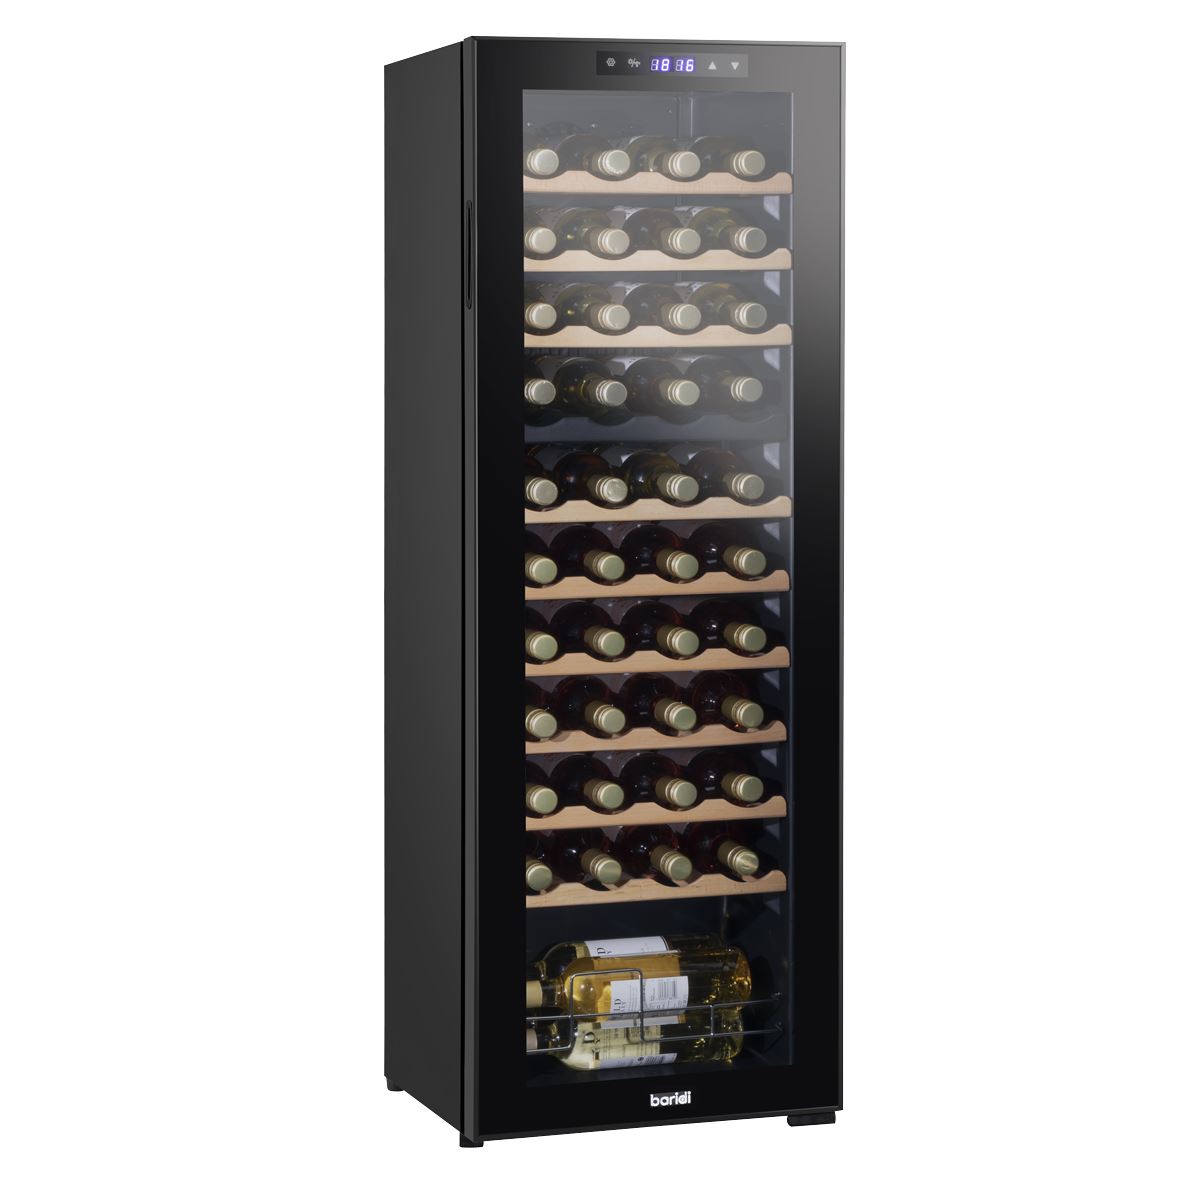 Baridi 44 Bottle Dual Zone Wine Cooler, Fridge with Digital Touch Screen Controls, Wooden Shelves & LED Light, Black